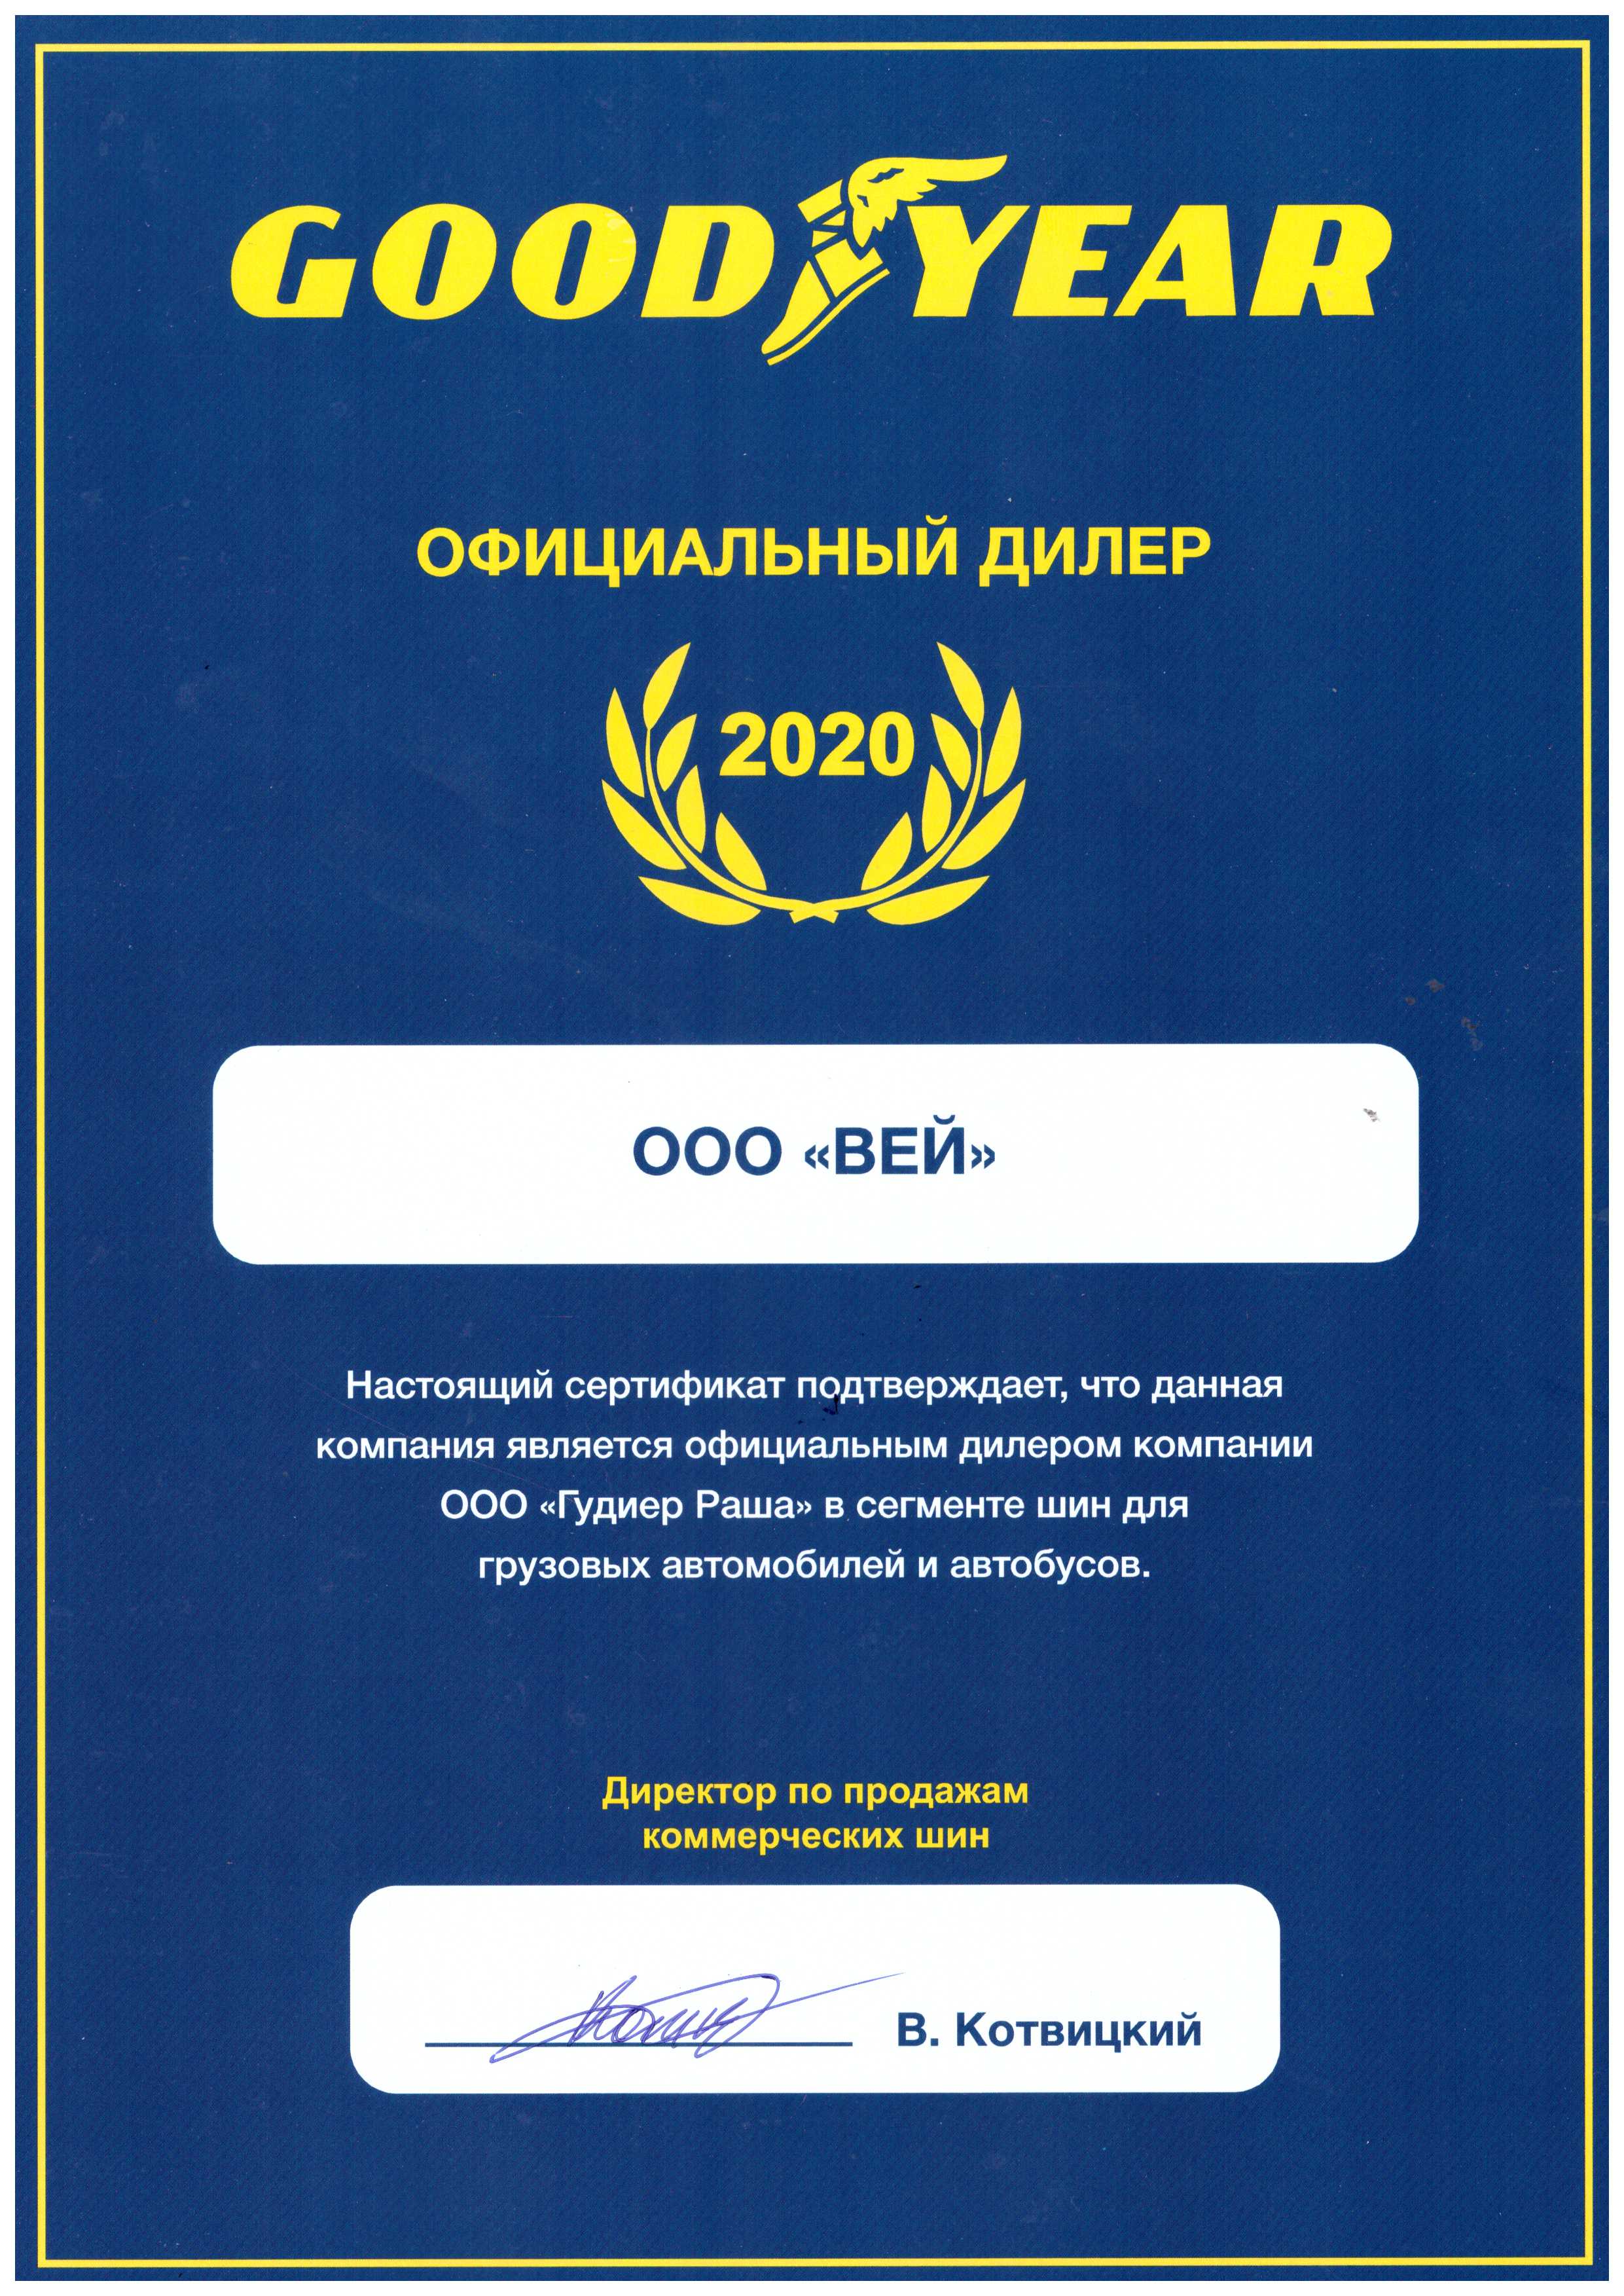 Сертификат дилера GOOD YEAR